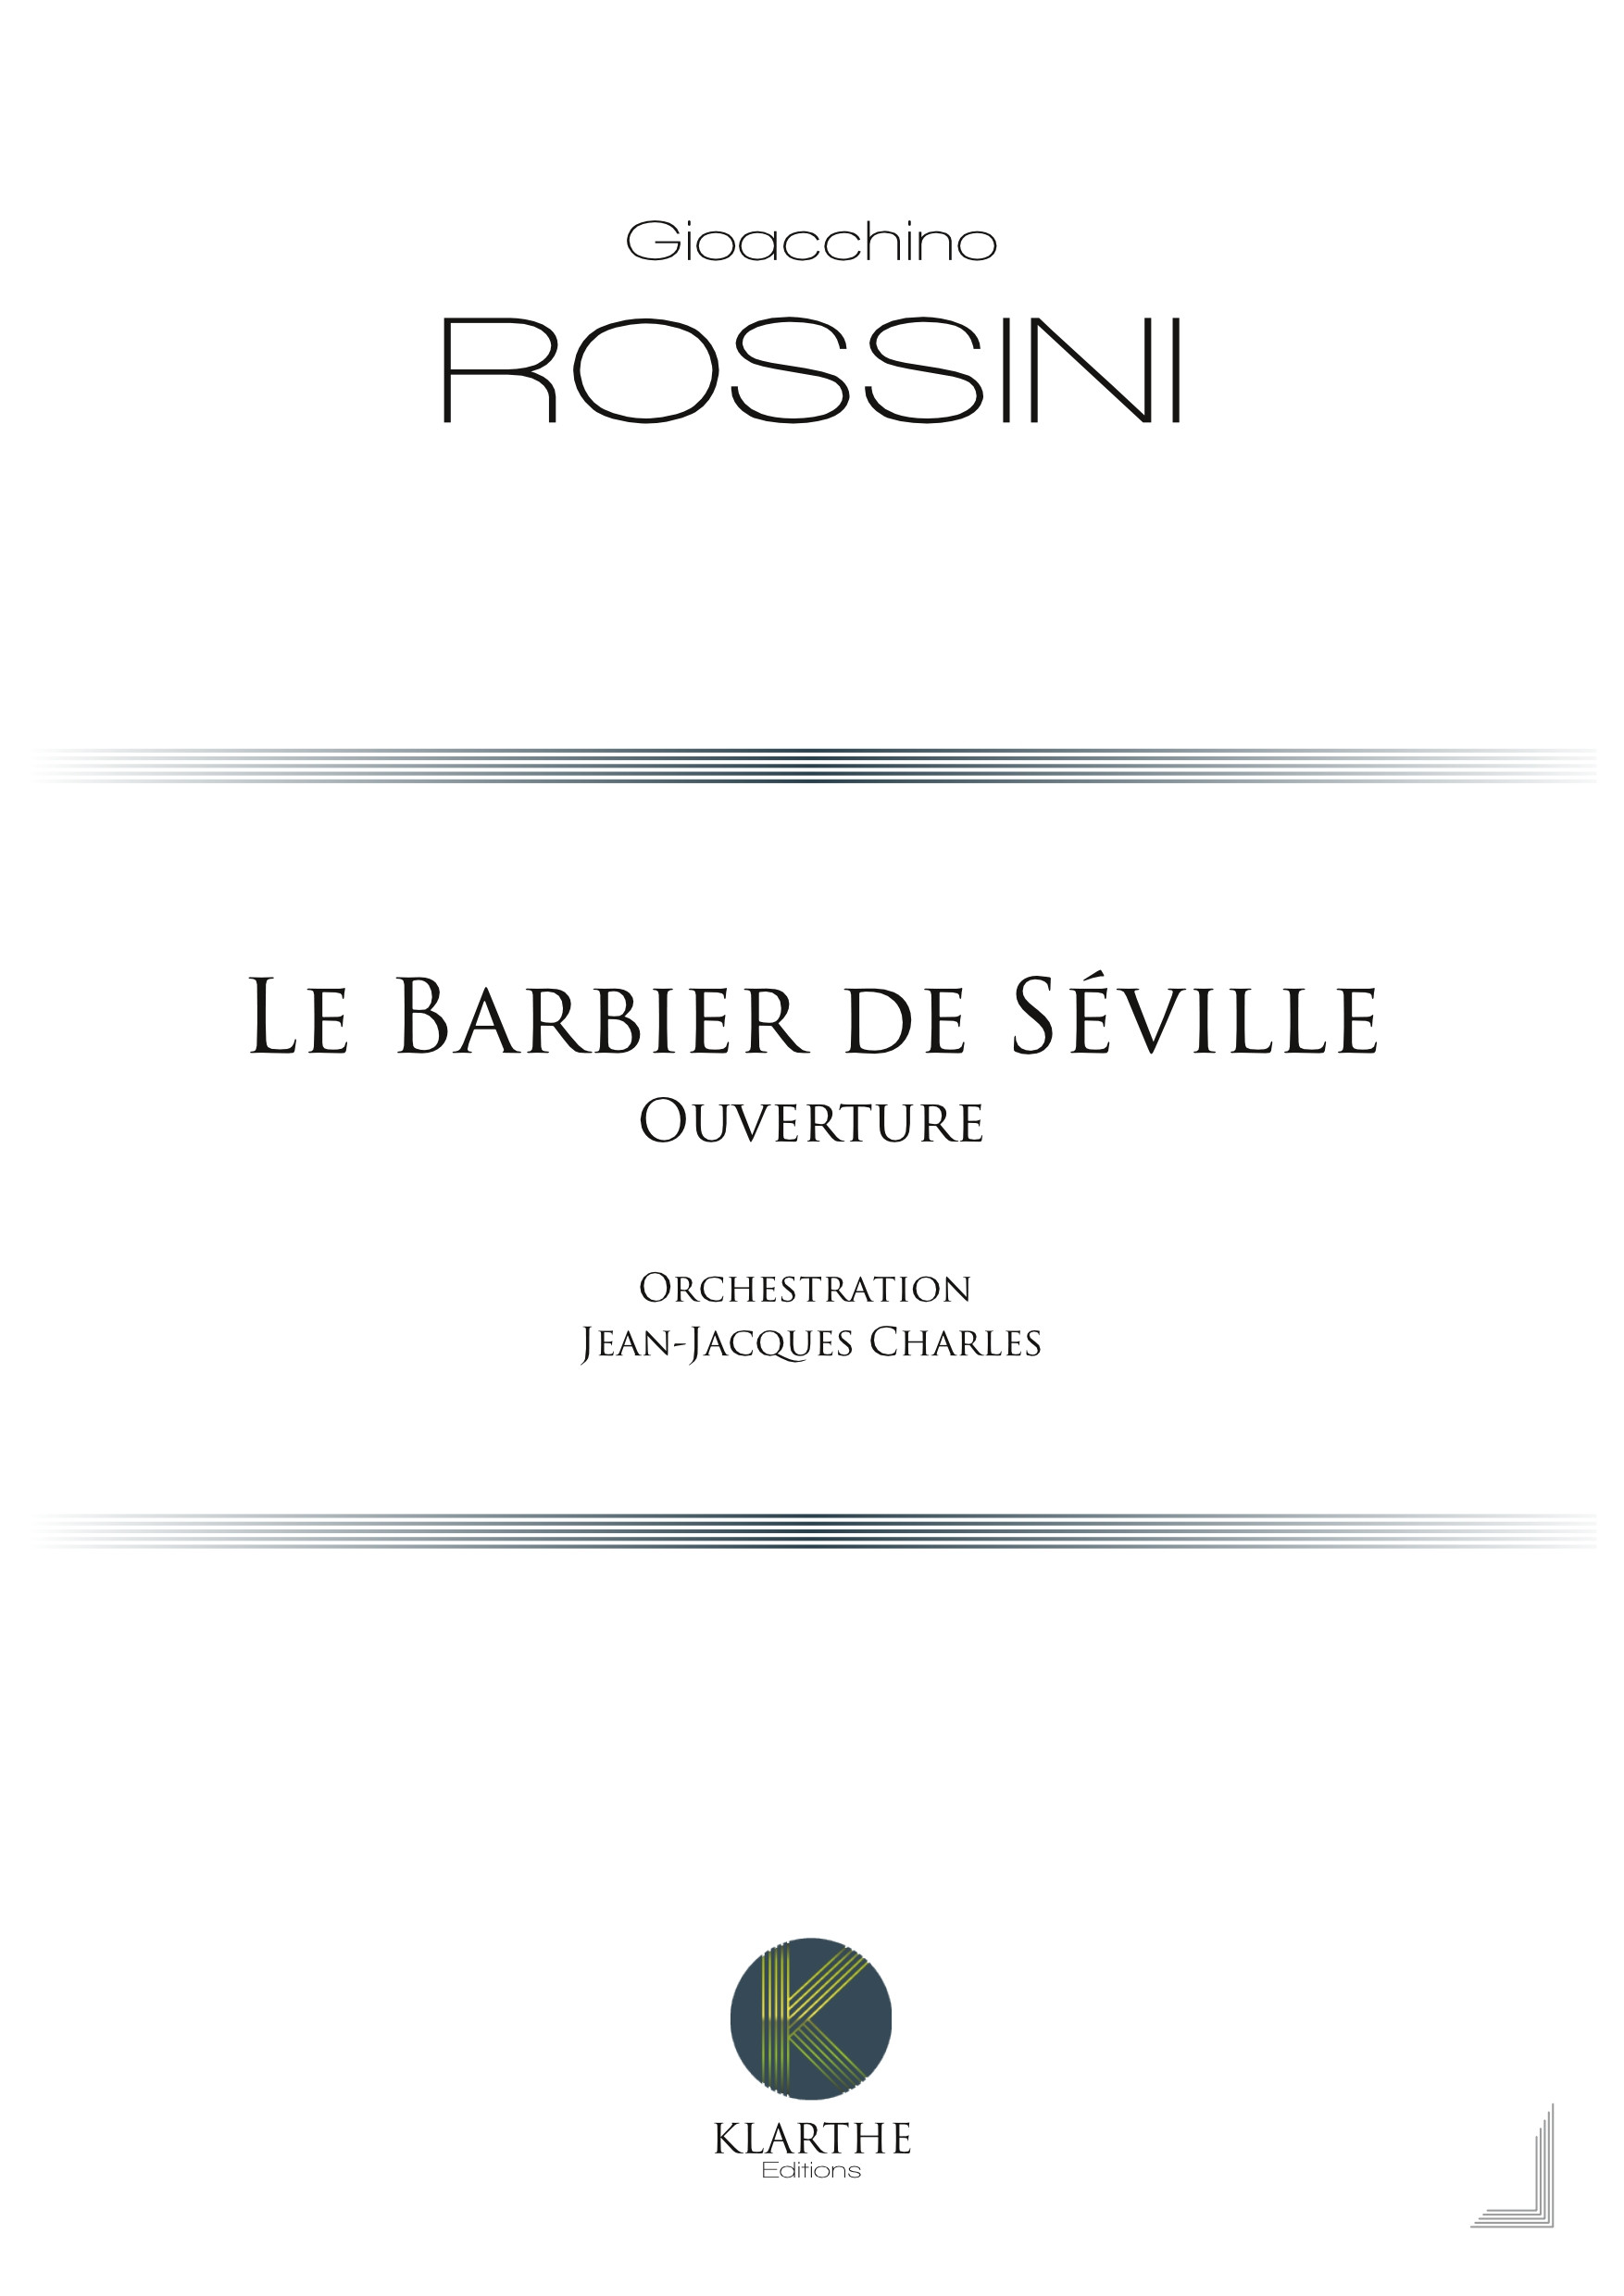 Ouverture du Barbier de Sville (ROSSINI GIOACHINO)